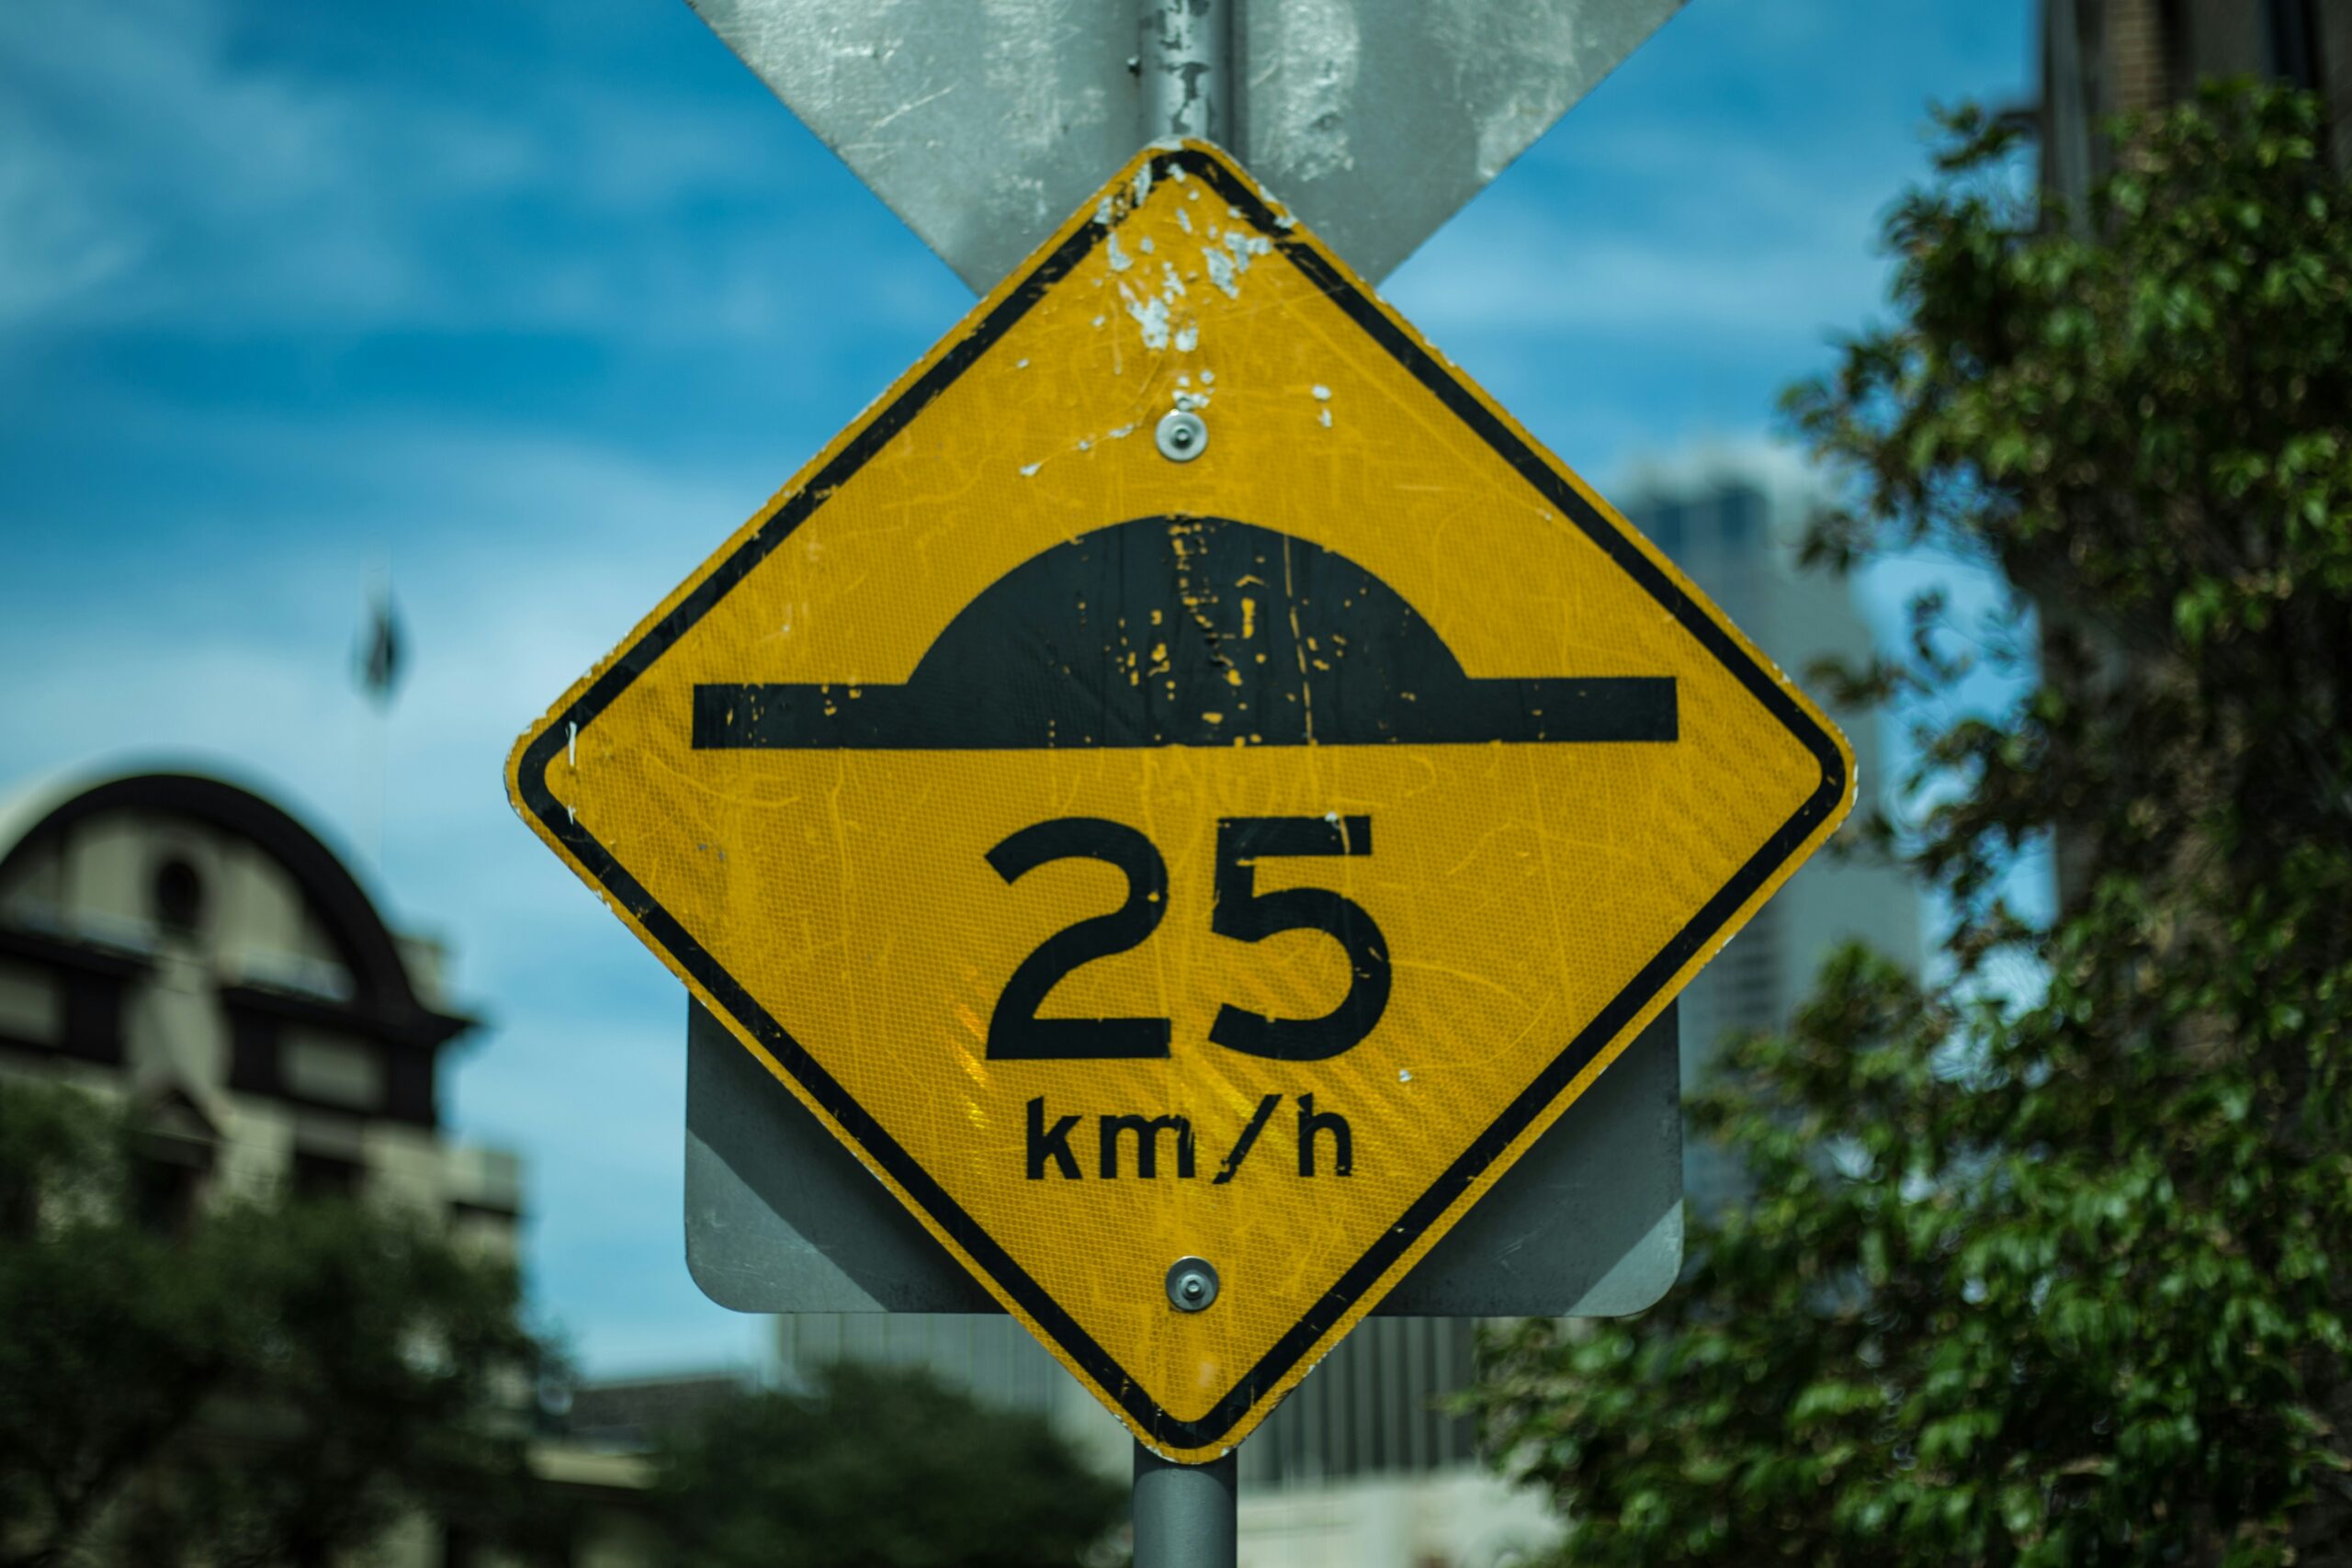 Speed hump signage